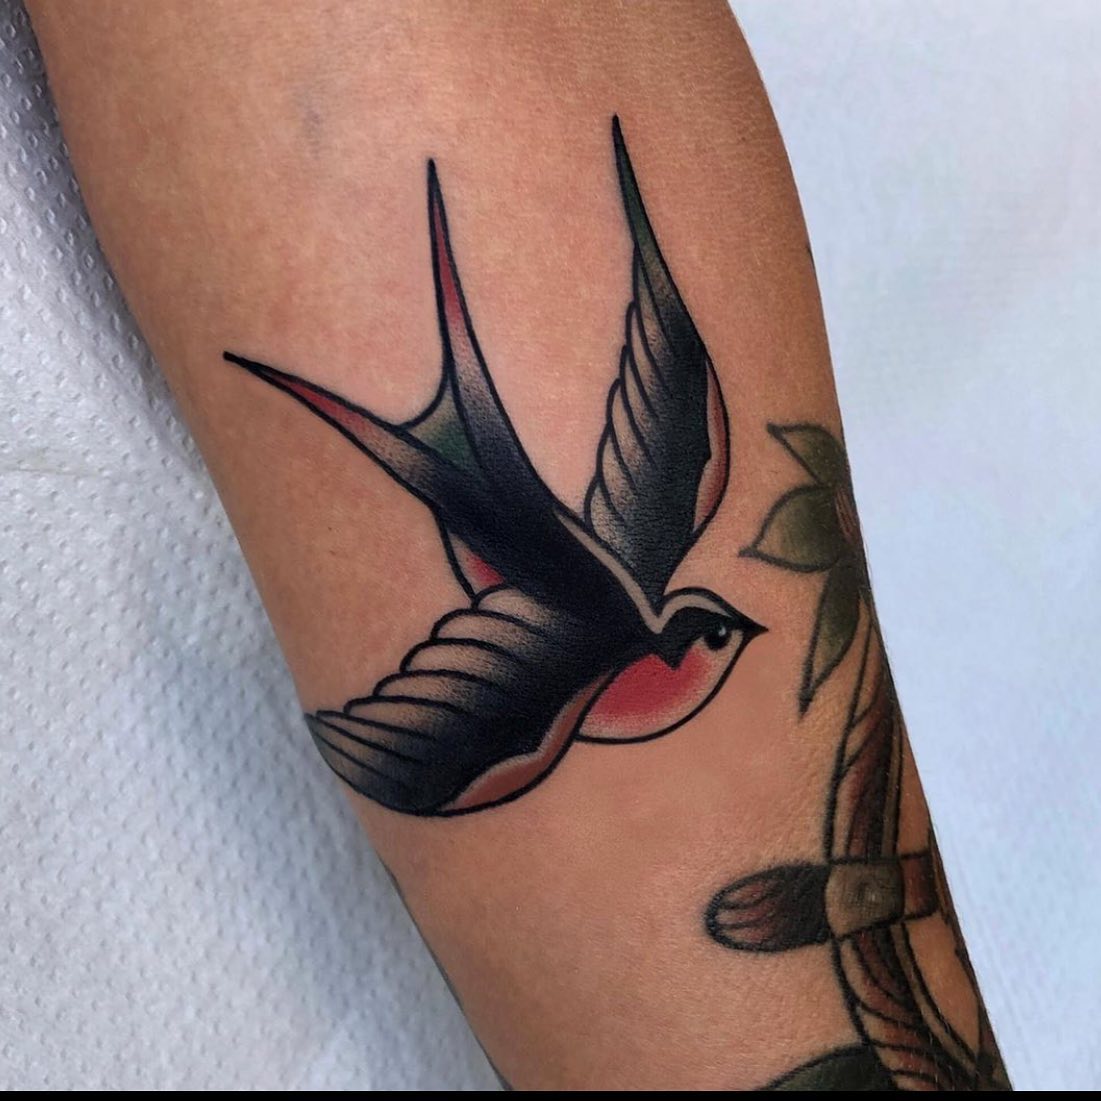 Swallow tattoo by harding susano tattooer